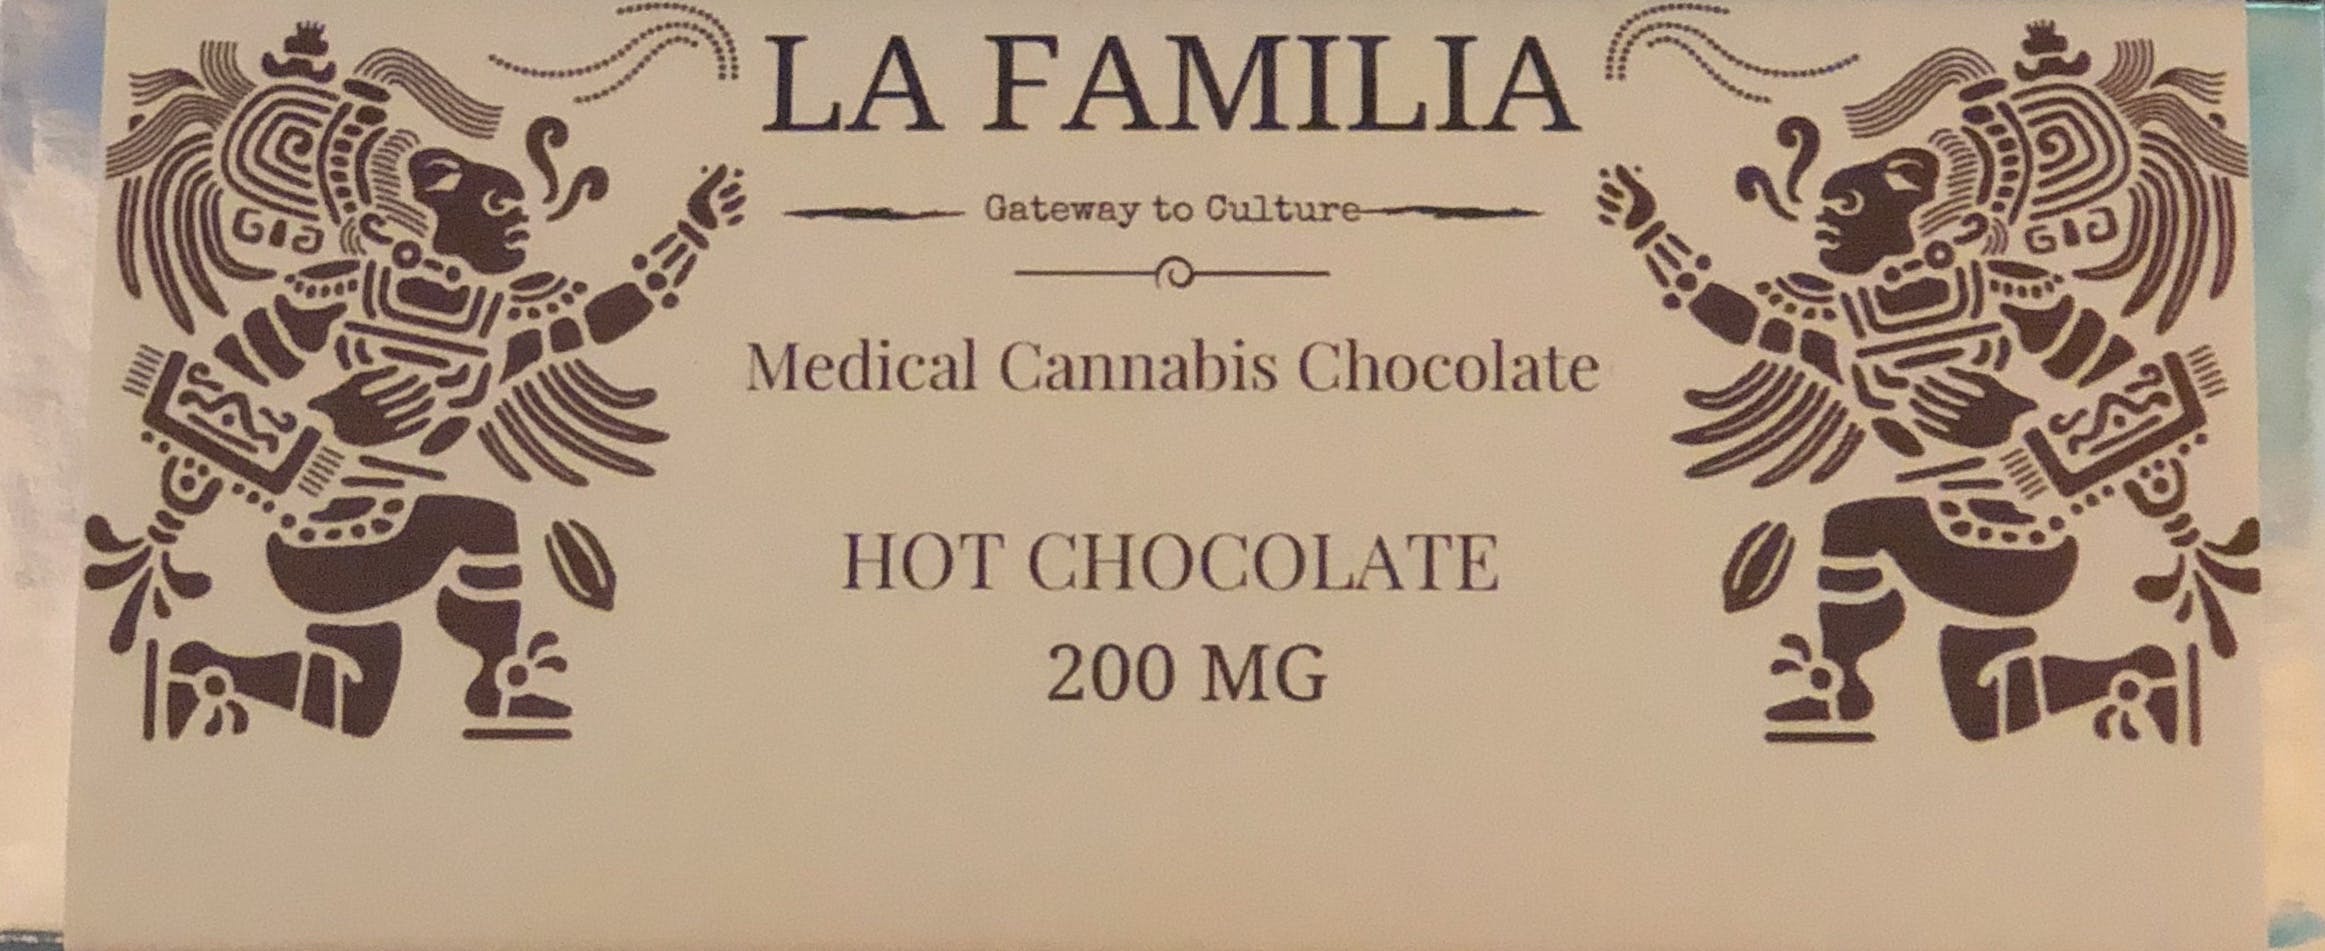 marijuana-dispensaries-pomonas-plug-20-cap-in-pomona-la-familia-200mg-hot-chocolate